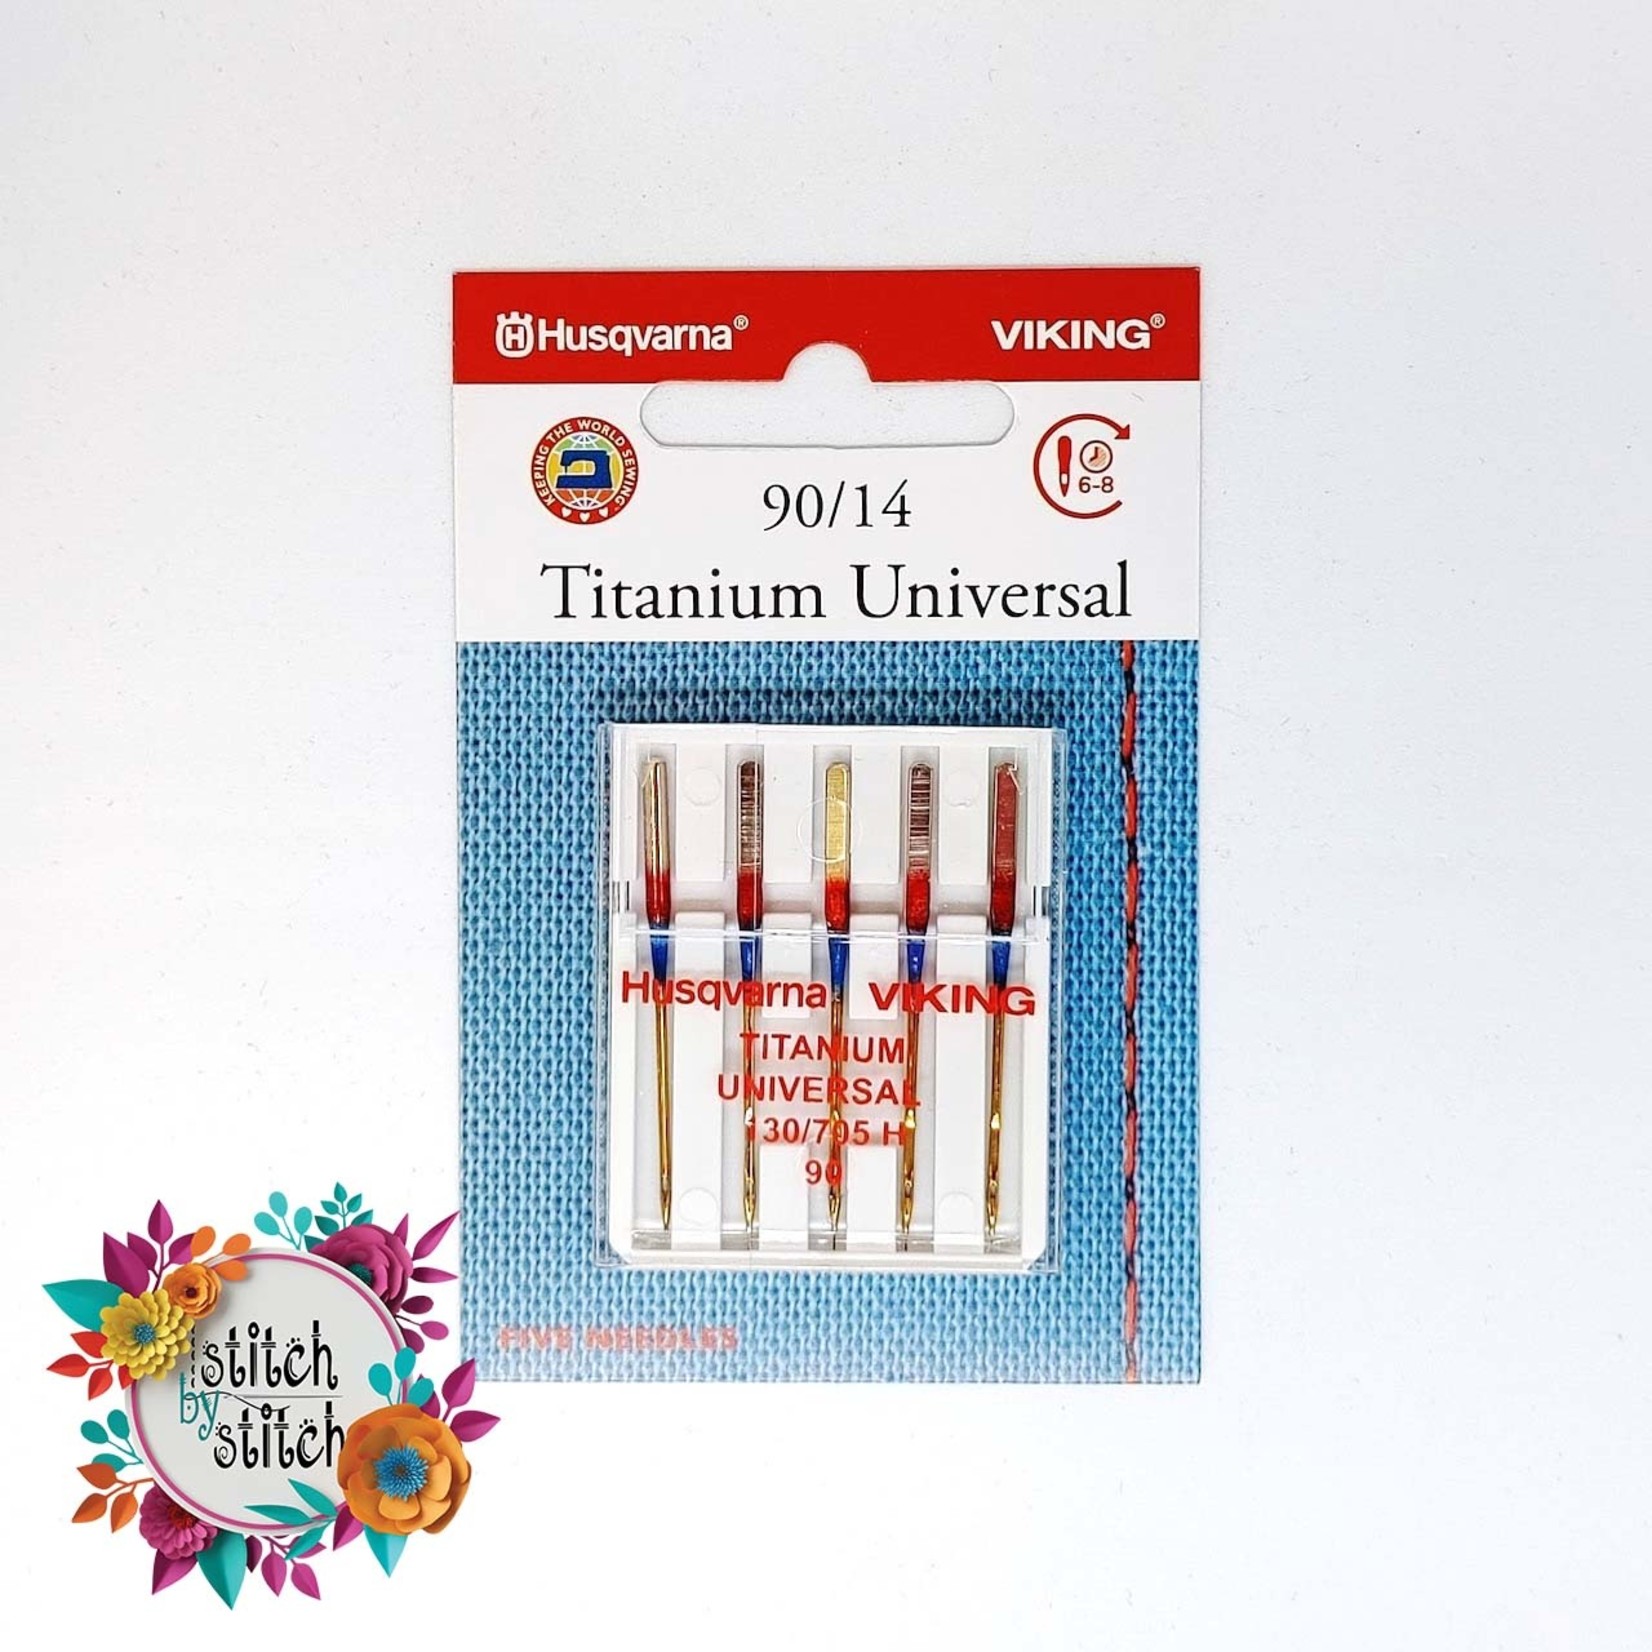 Husqvarna Viking Husqvarna Viking Titanium Universal Needle - Size 90/14 5 pack